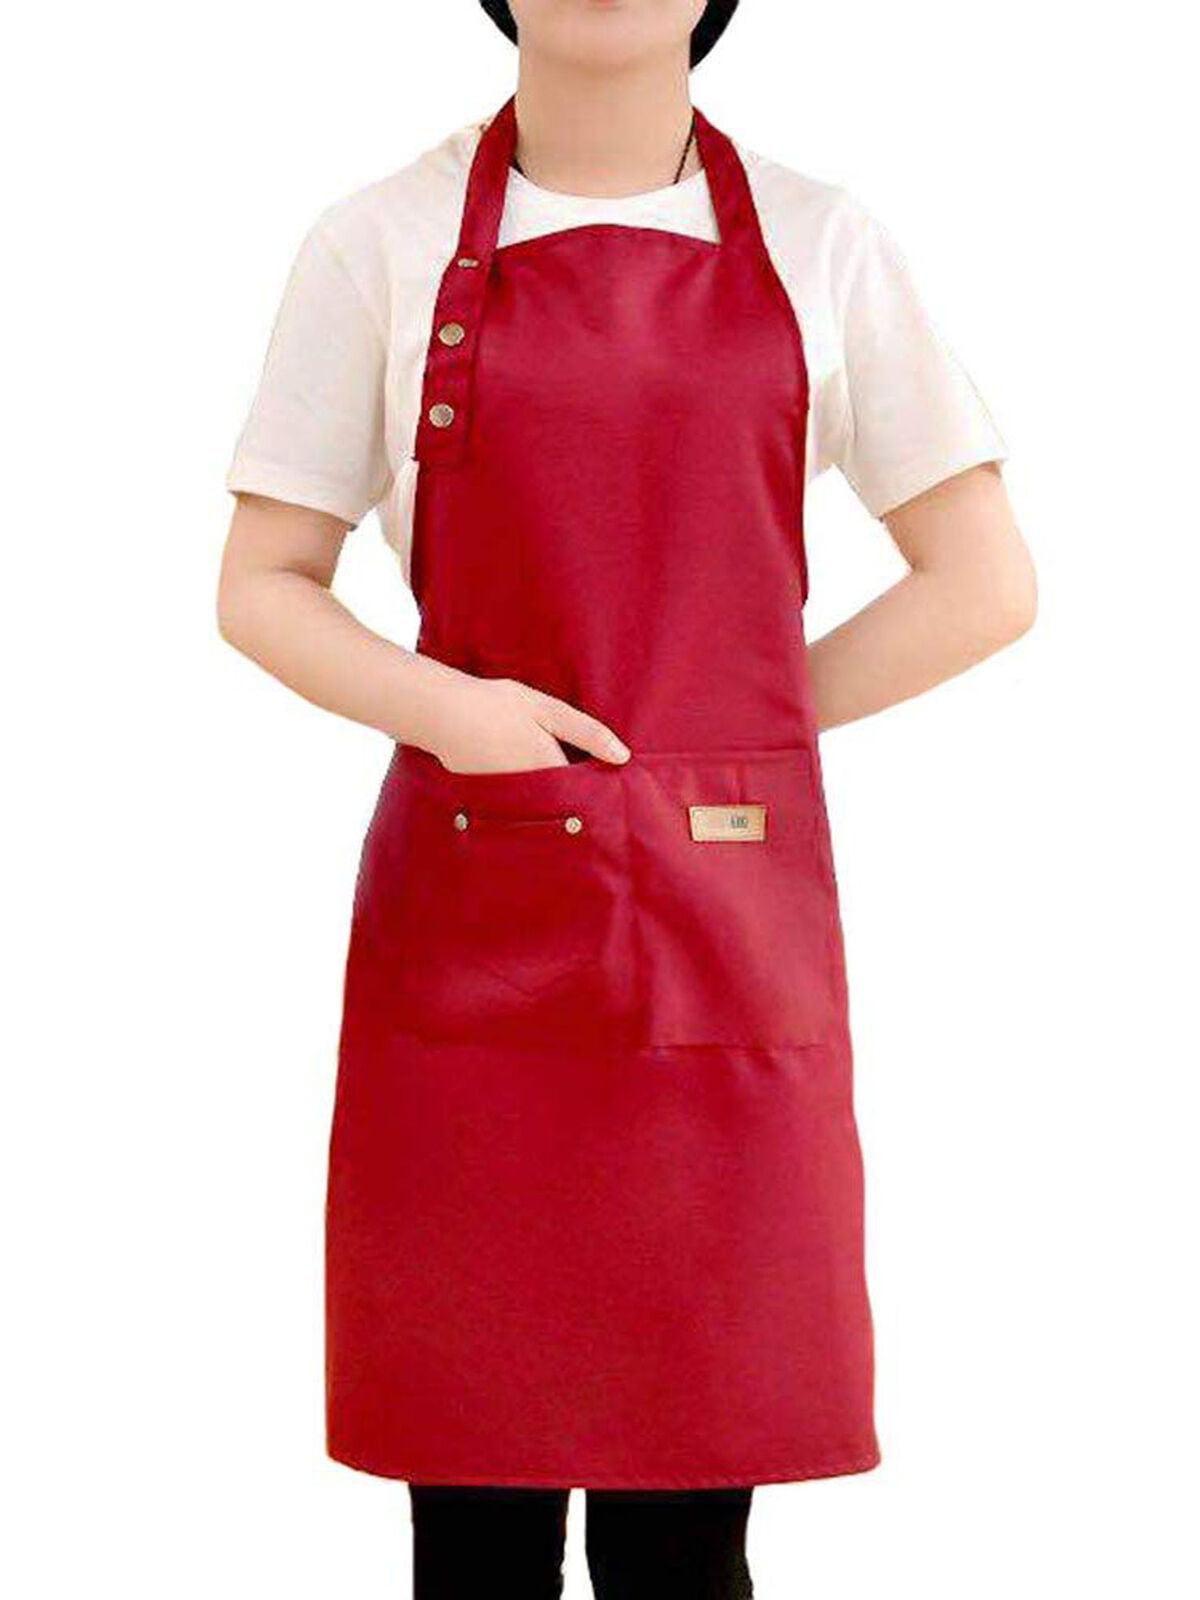 Fashion Men Women Solid Cooking Kitchen Restaurant Bib Apron Dress with Pocket